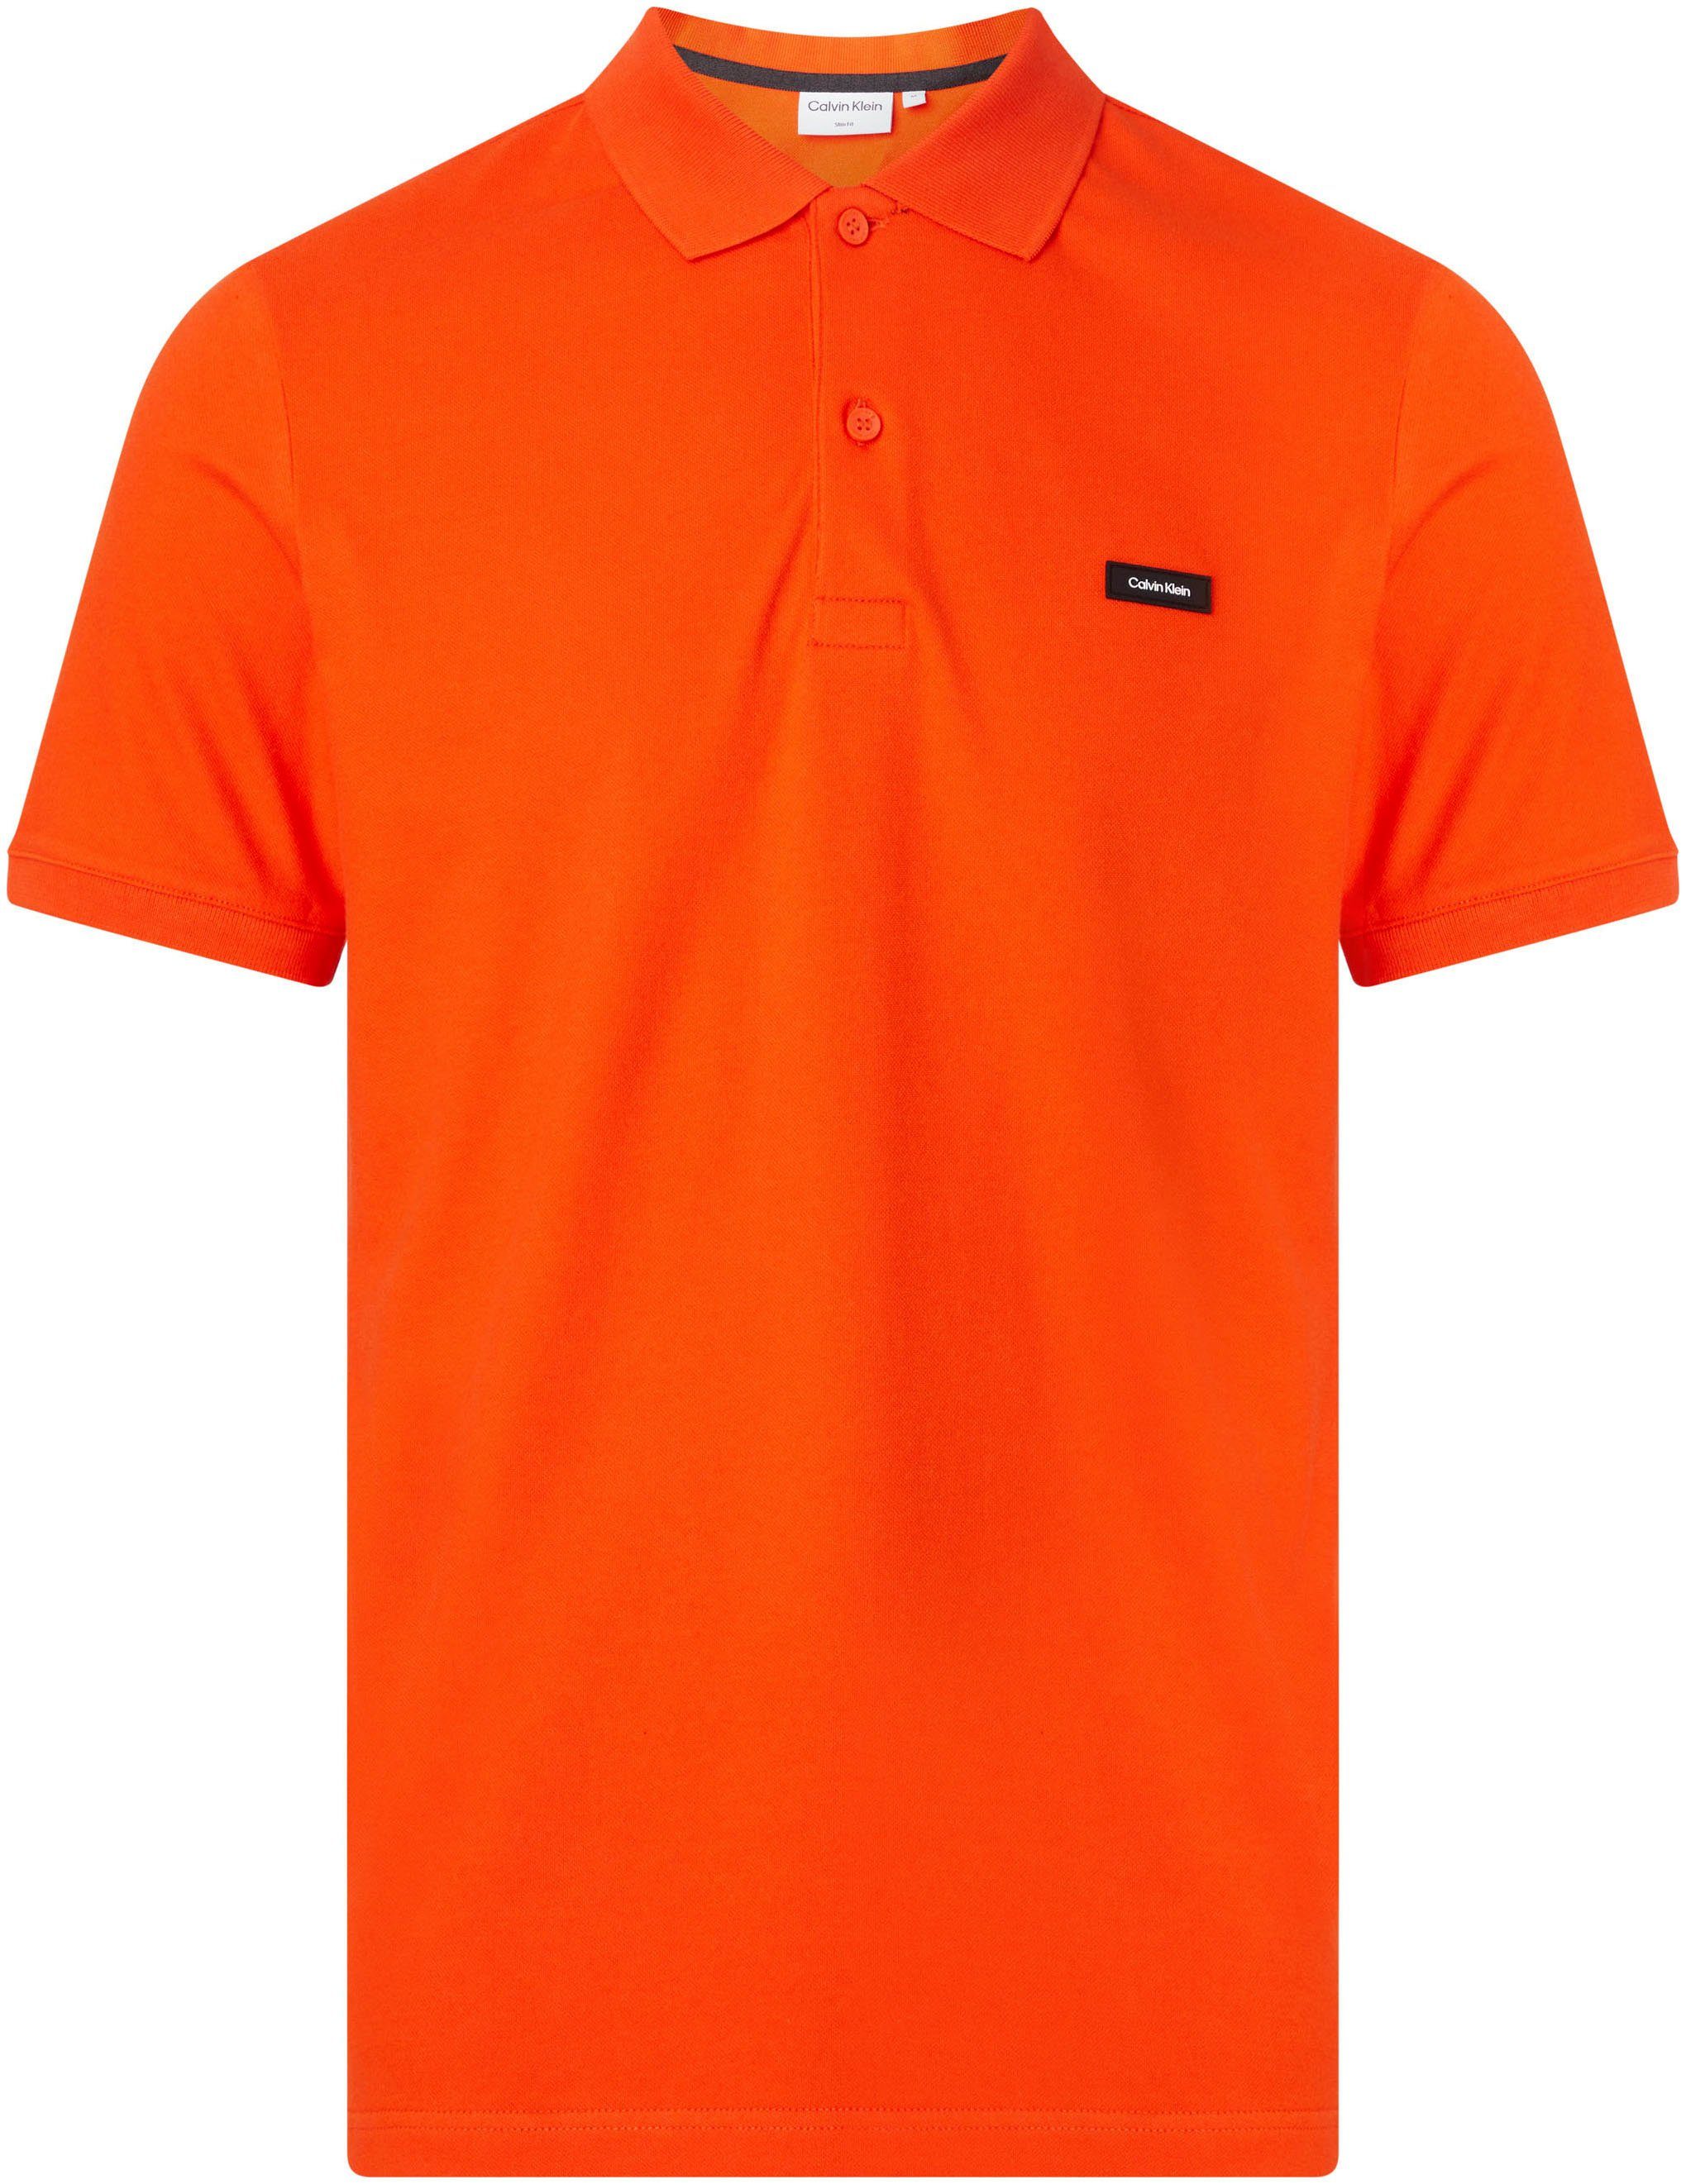 Klein Calvin Big&Tall orange mit Poloshirt Polokragen